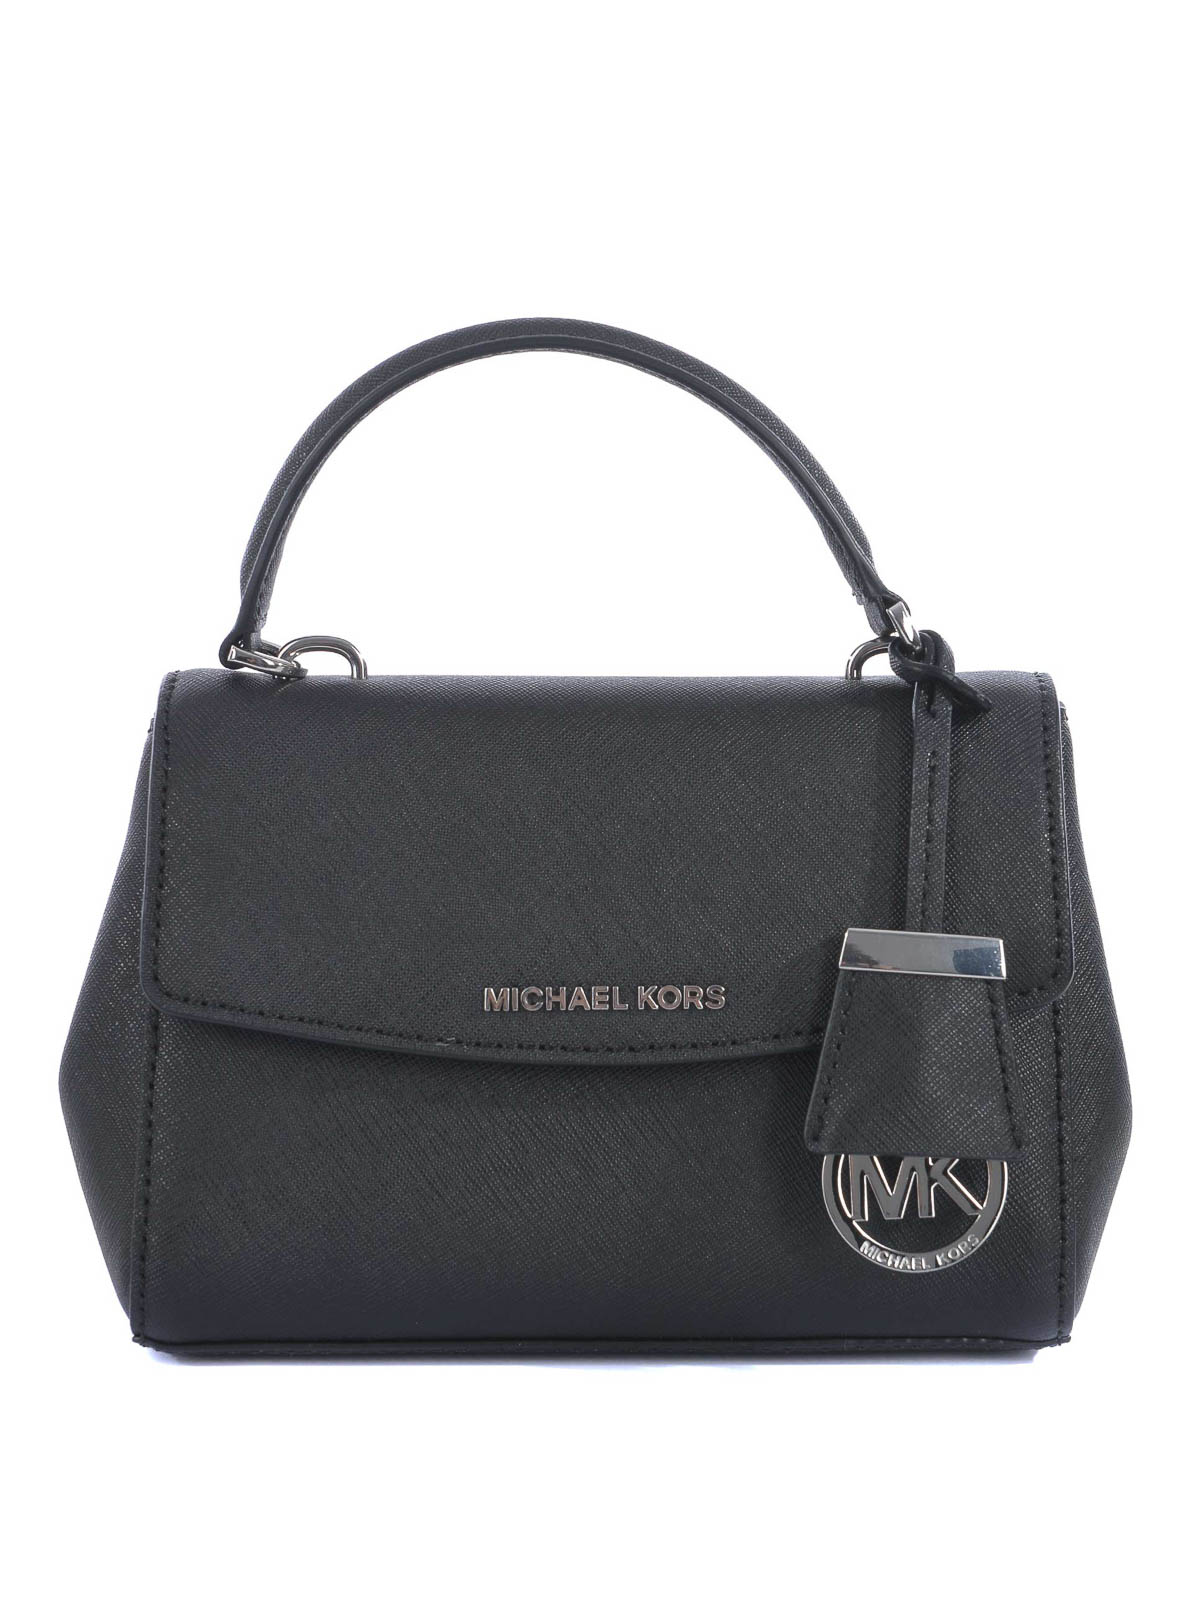 Michael Michael Kors Ava Small Satchel  Handbags michael kors, Michael kors  handbags crossbody, Michael kors ava